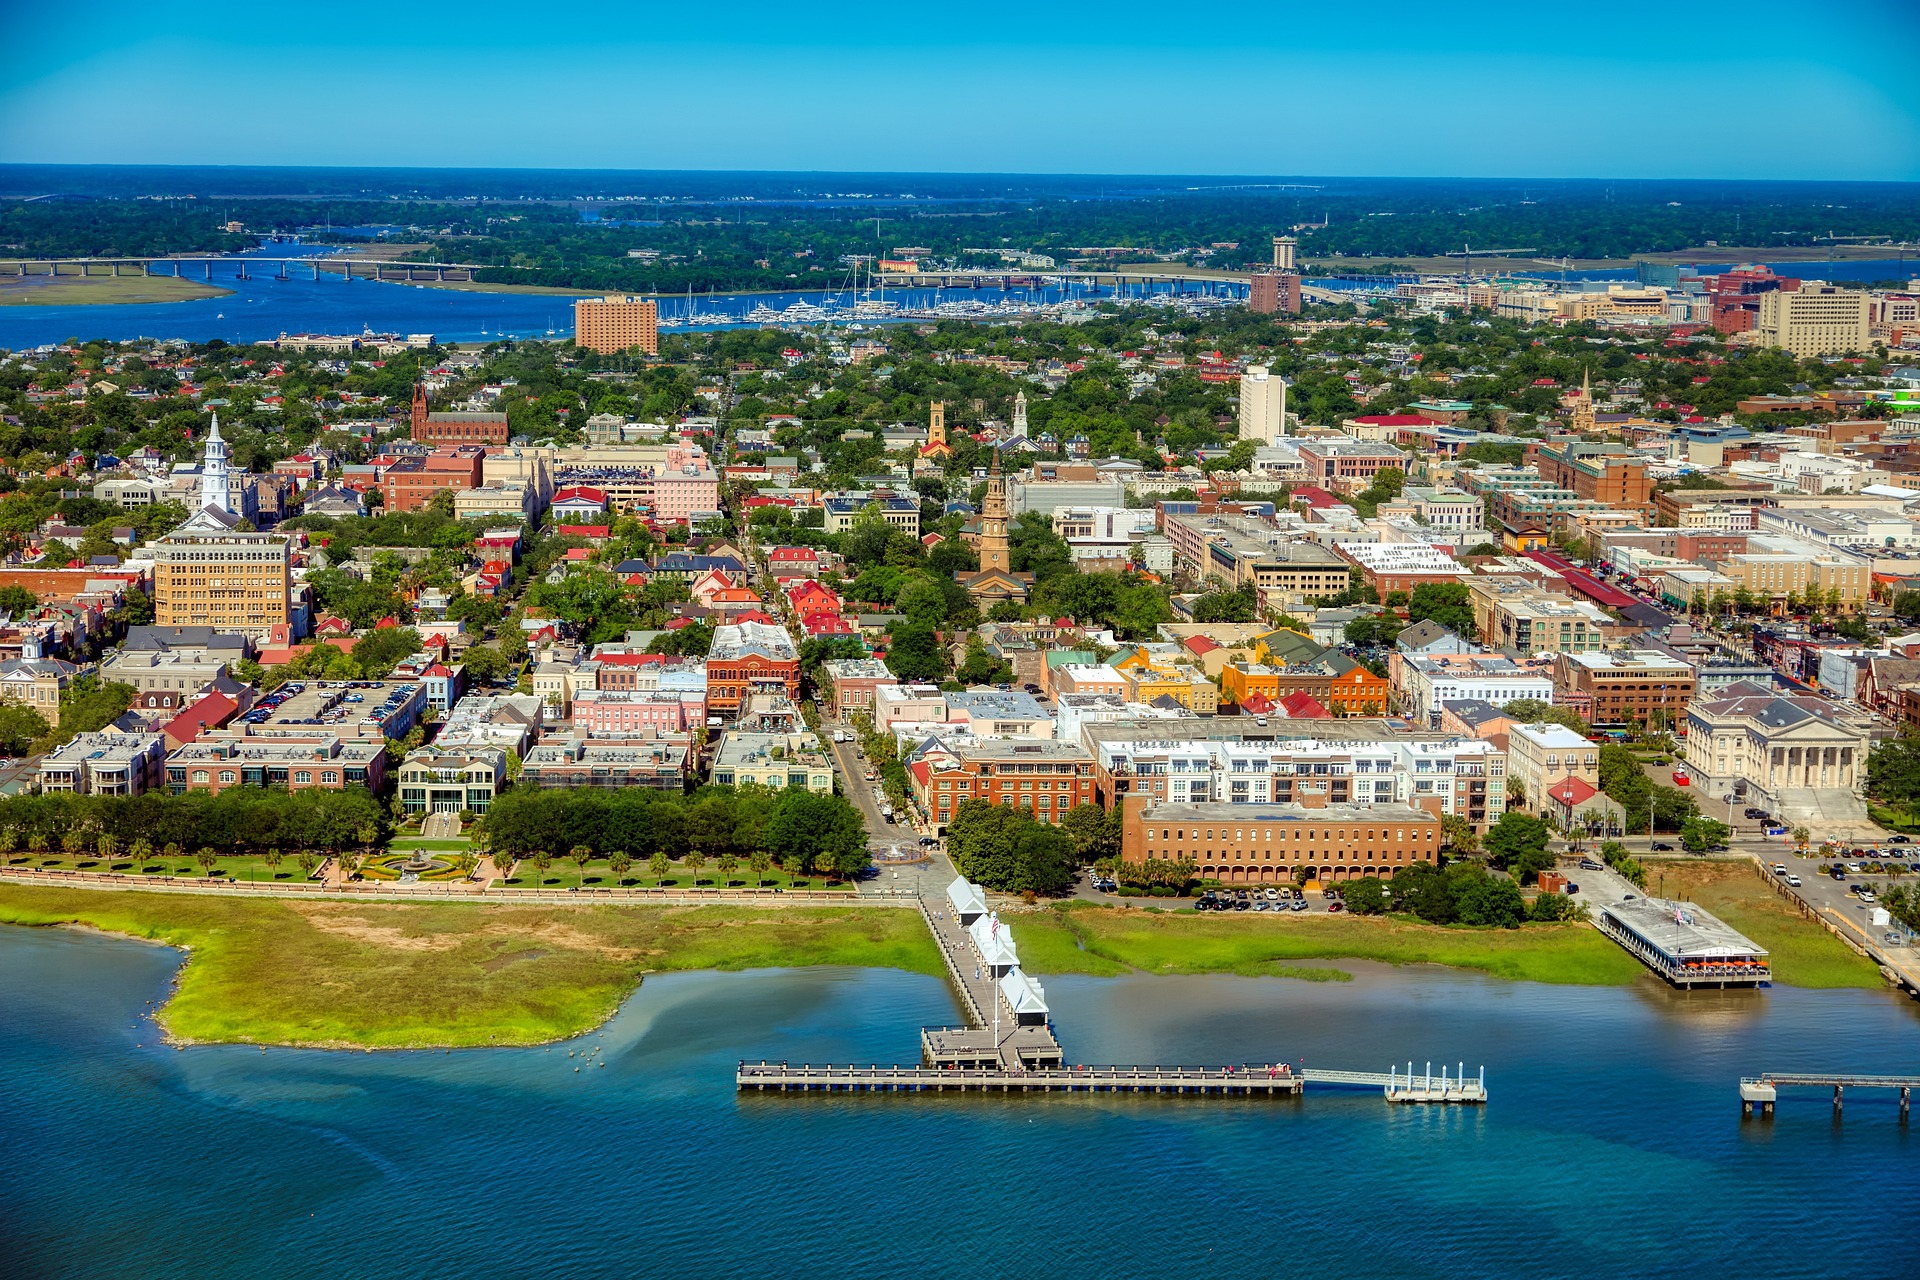 Charleston, South Carolina (Photo Credit: David from Pixabay)